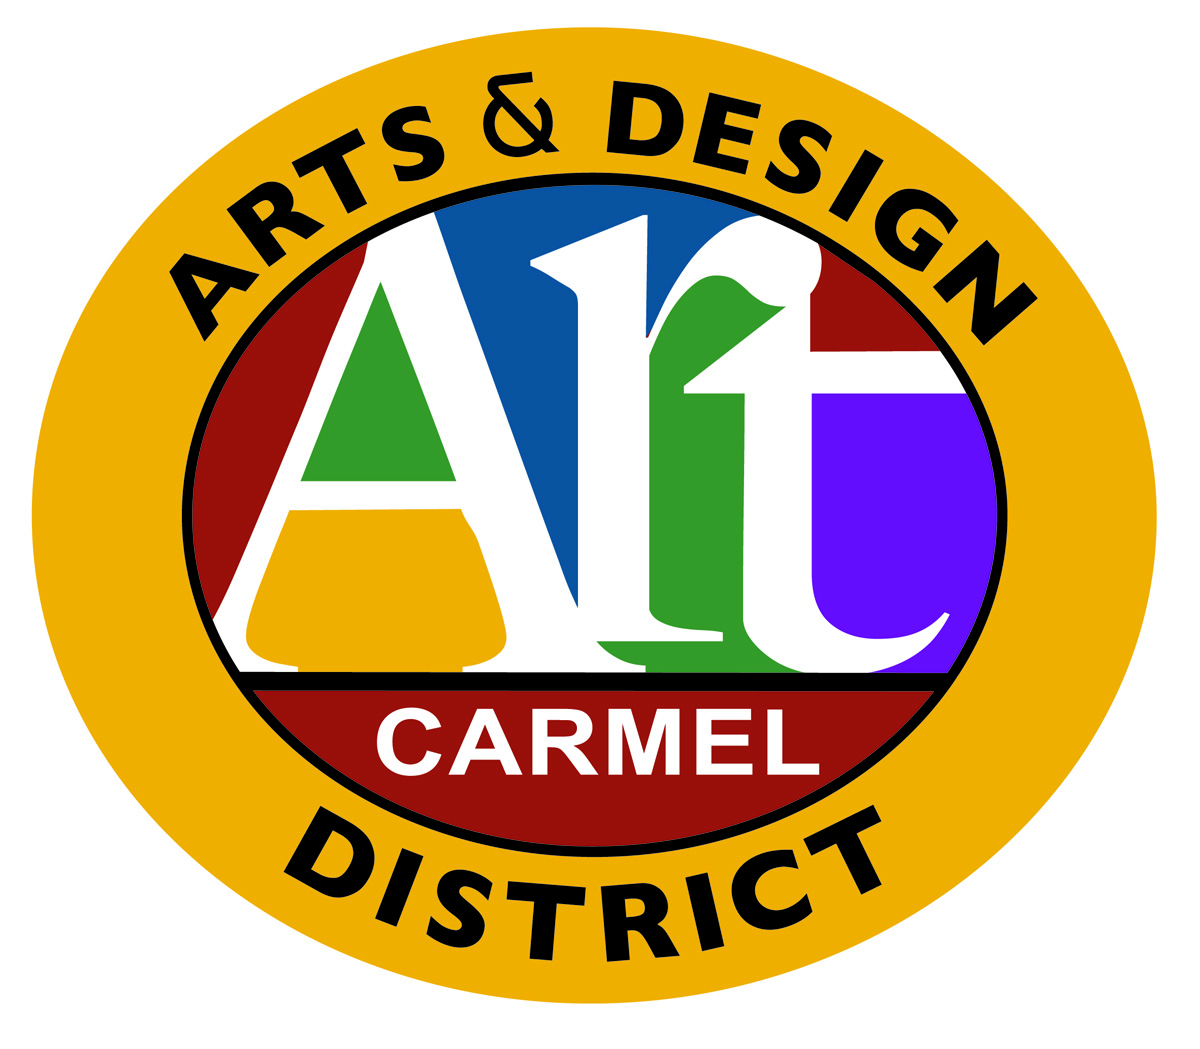 Carmel Arts & Design District